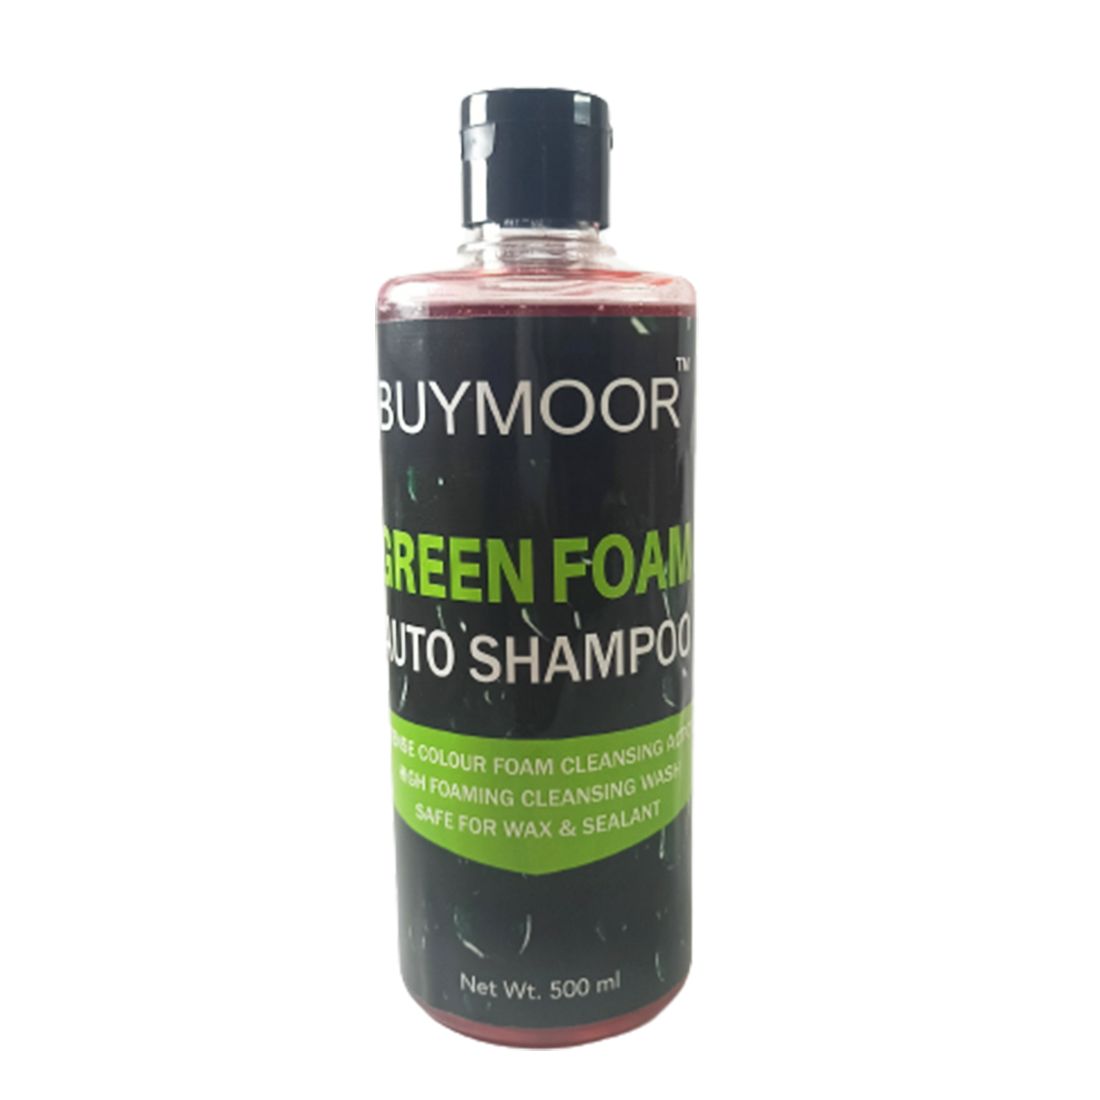 BUYMOOR Green Foam Auto Shampoo - Wax & Sealant Safe Car Cleaning Solution 500 ML